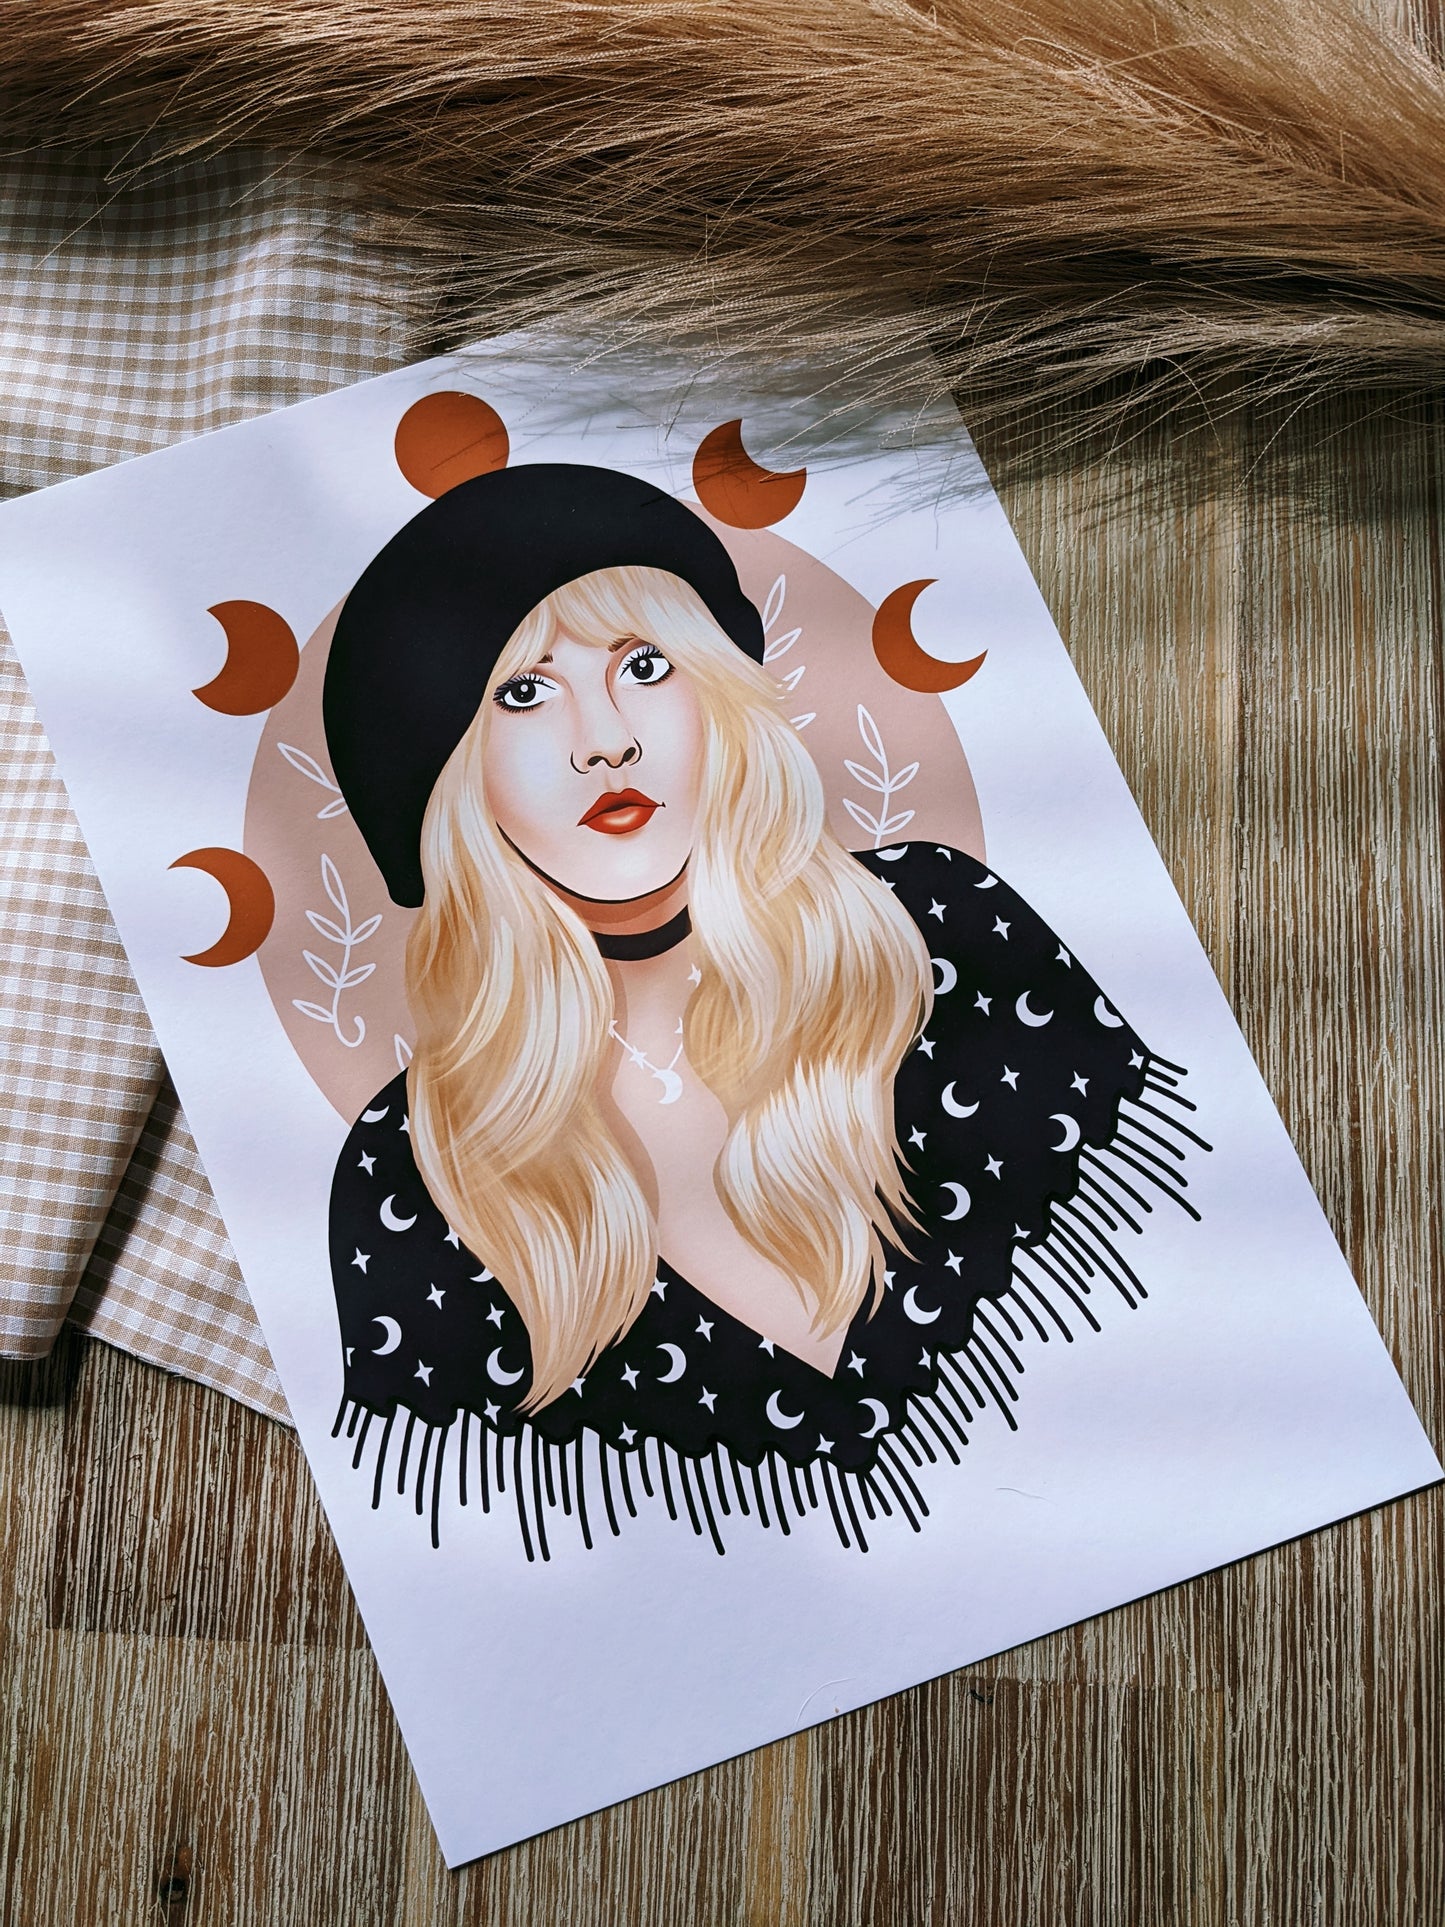 Stevie Nicks Fleetwoodmac Art Print